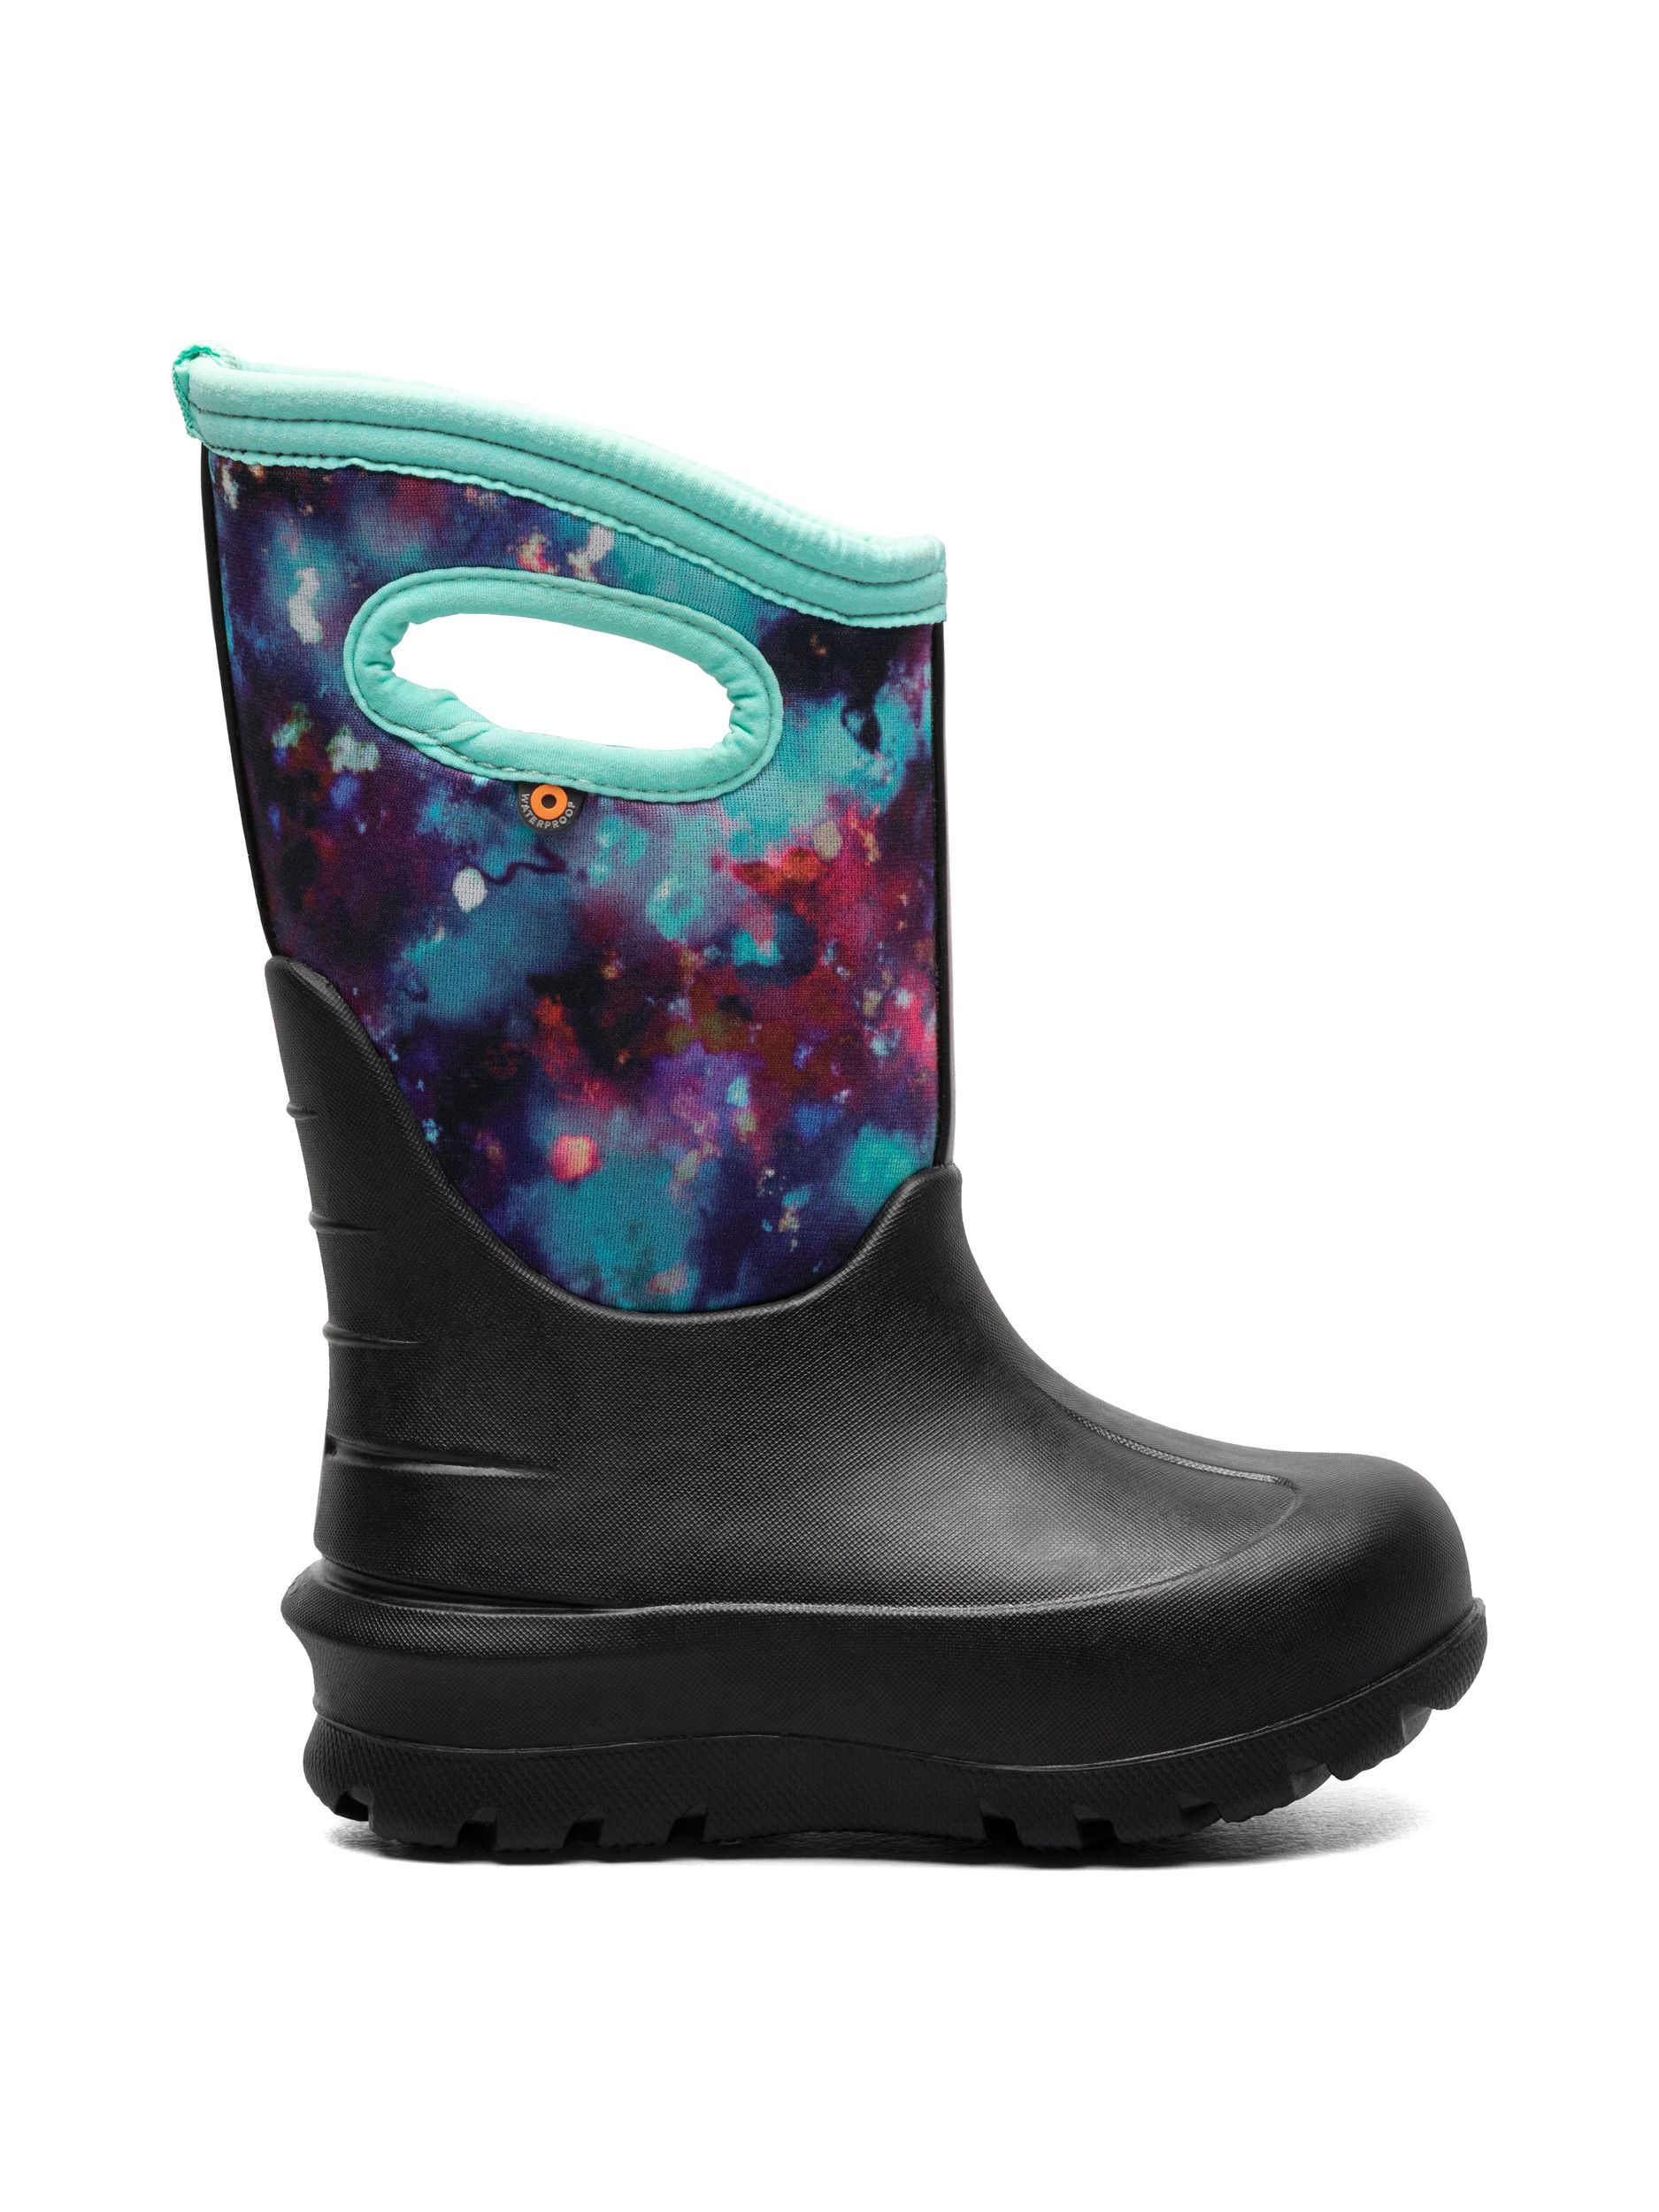 Image of Bogs Kids' Pre-School Neo Classic Waterproof Insulated Non-Slip Winter Boots